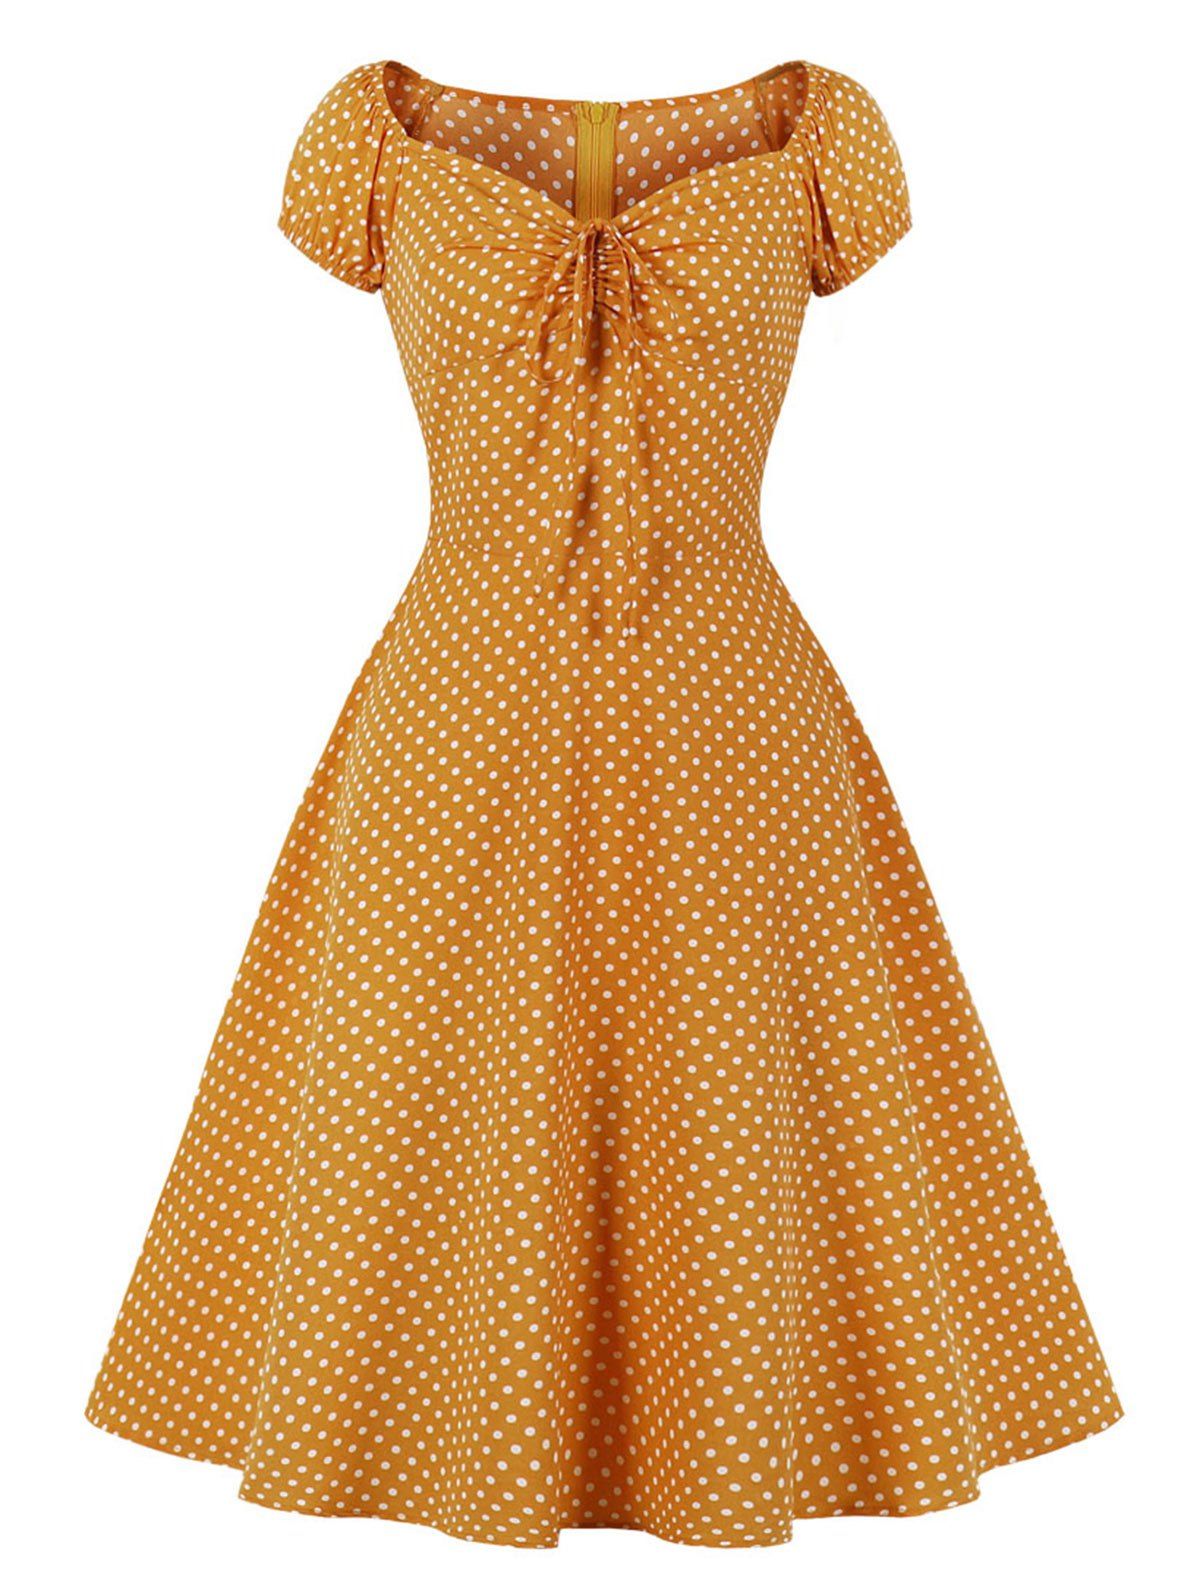 Polka Dot Cinched Dress - YELLOW L